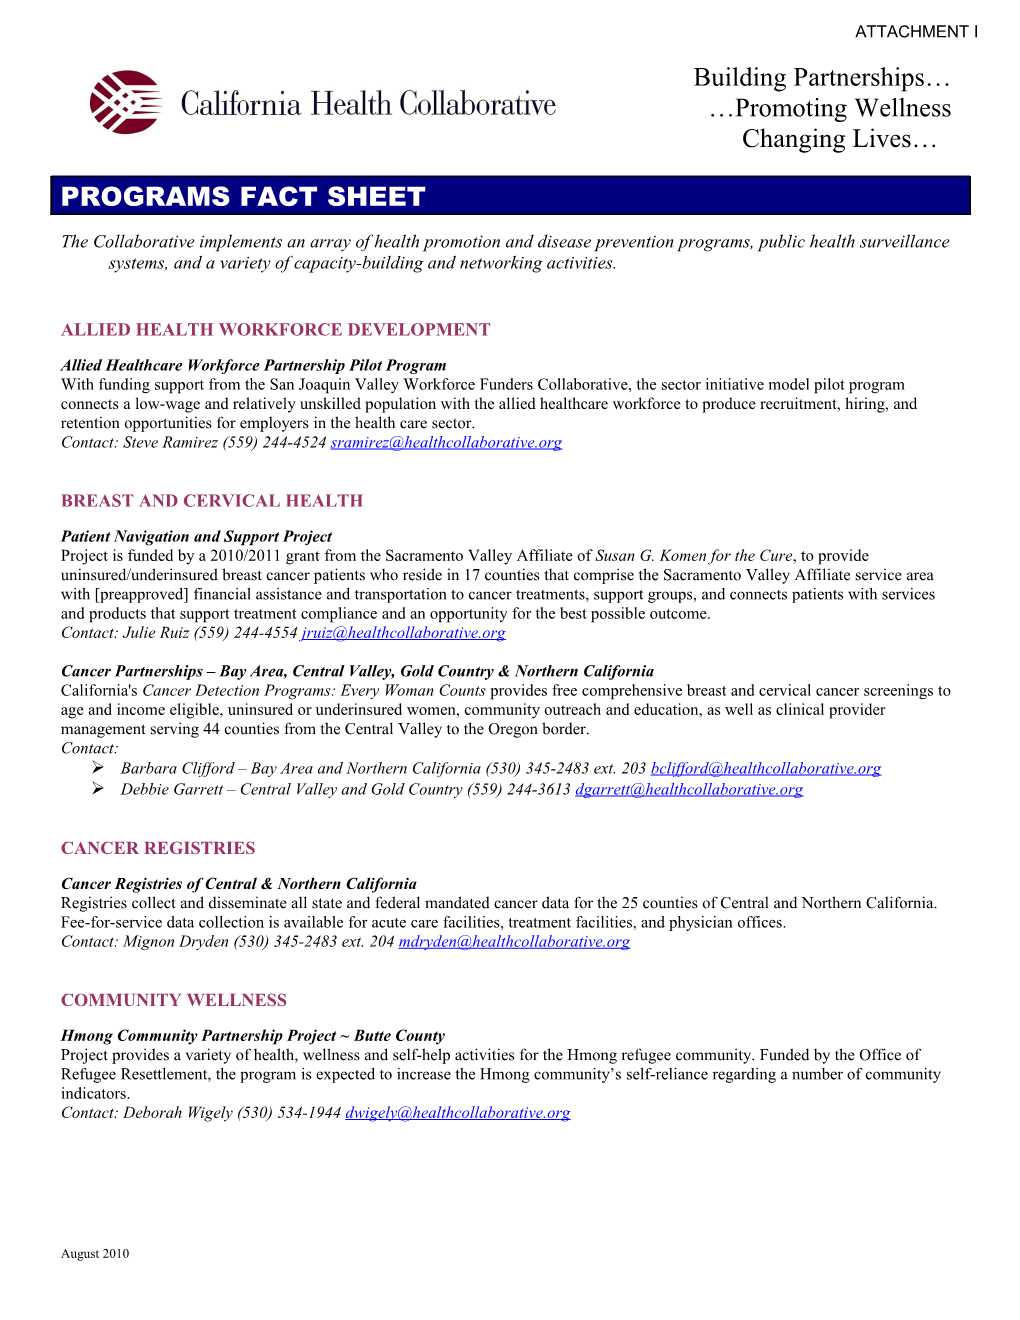 Programs Fact Sheet